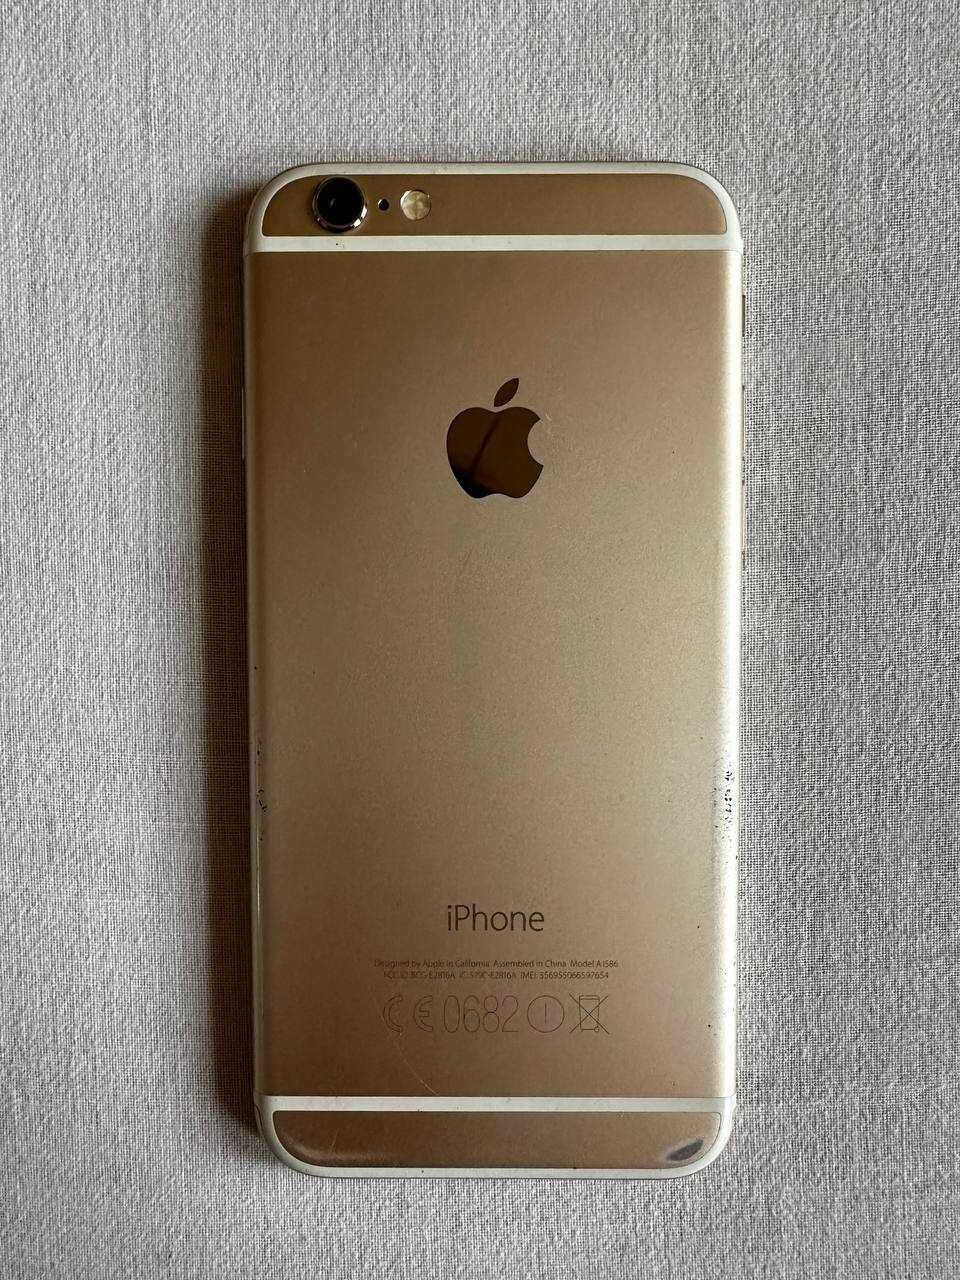 Apple iPhone 6 64 GB Gold